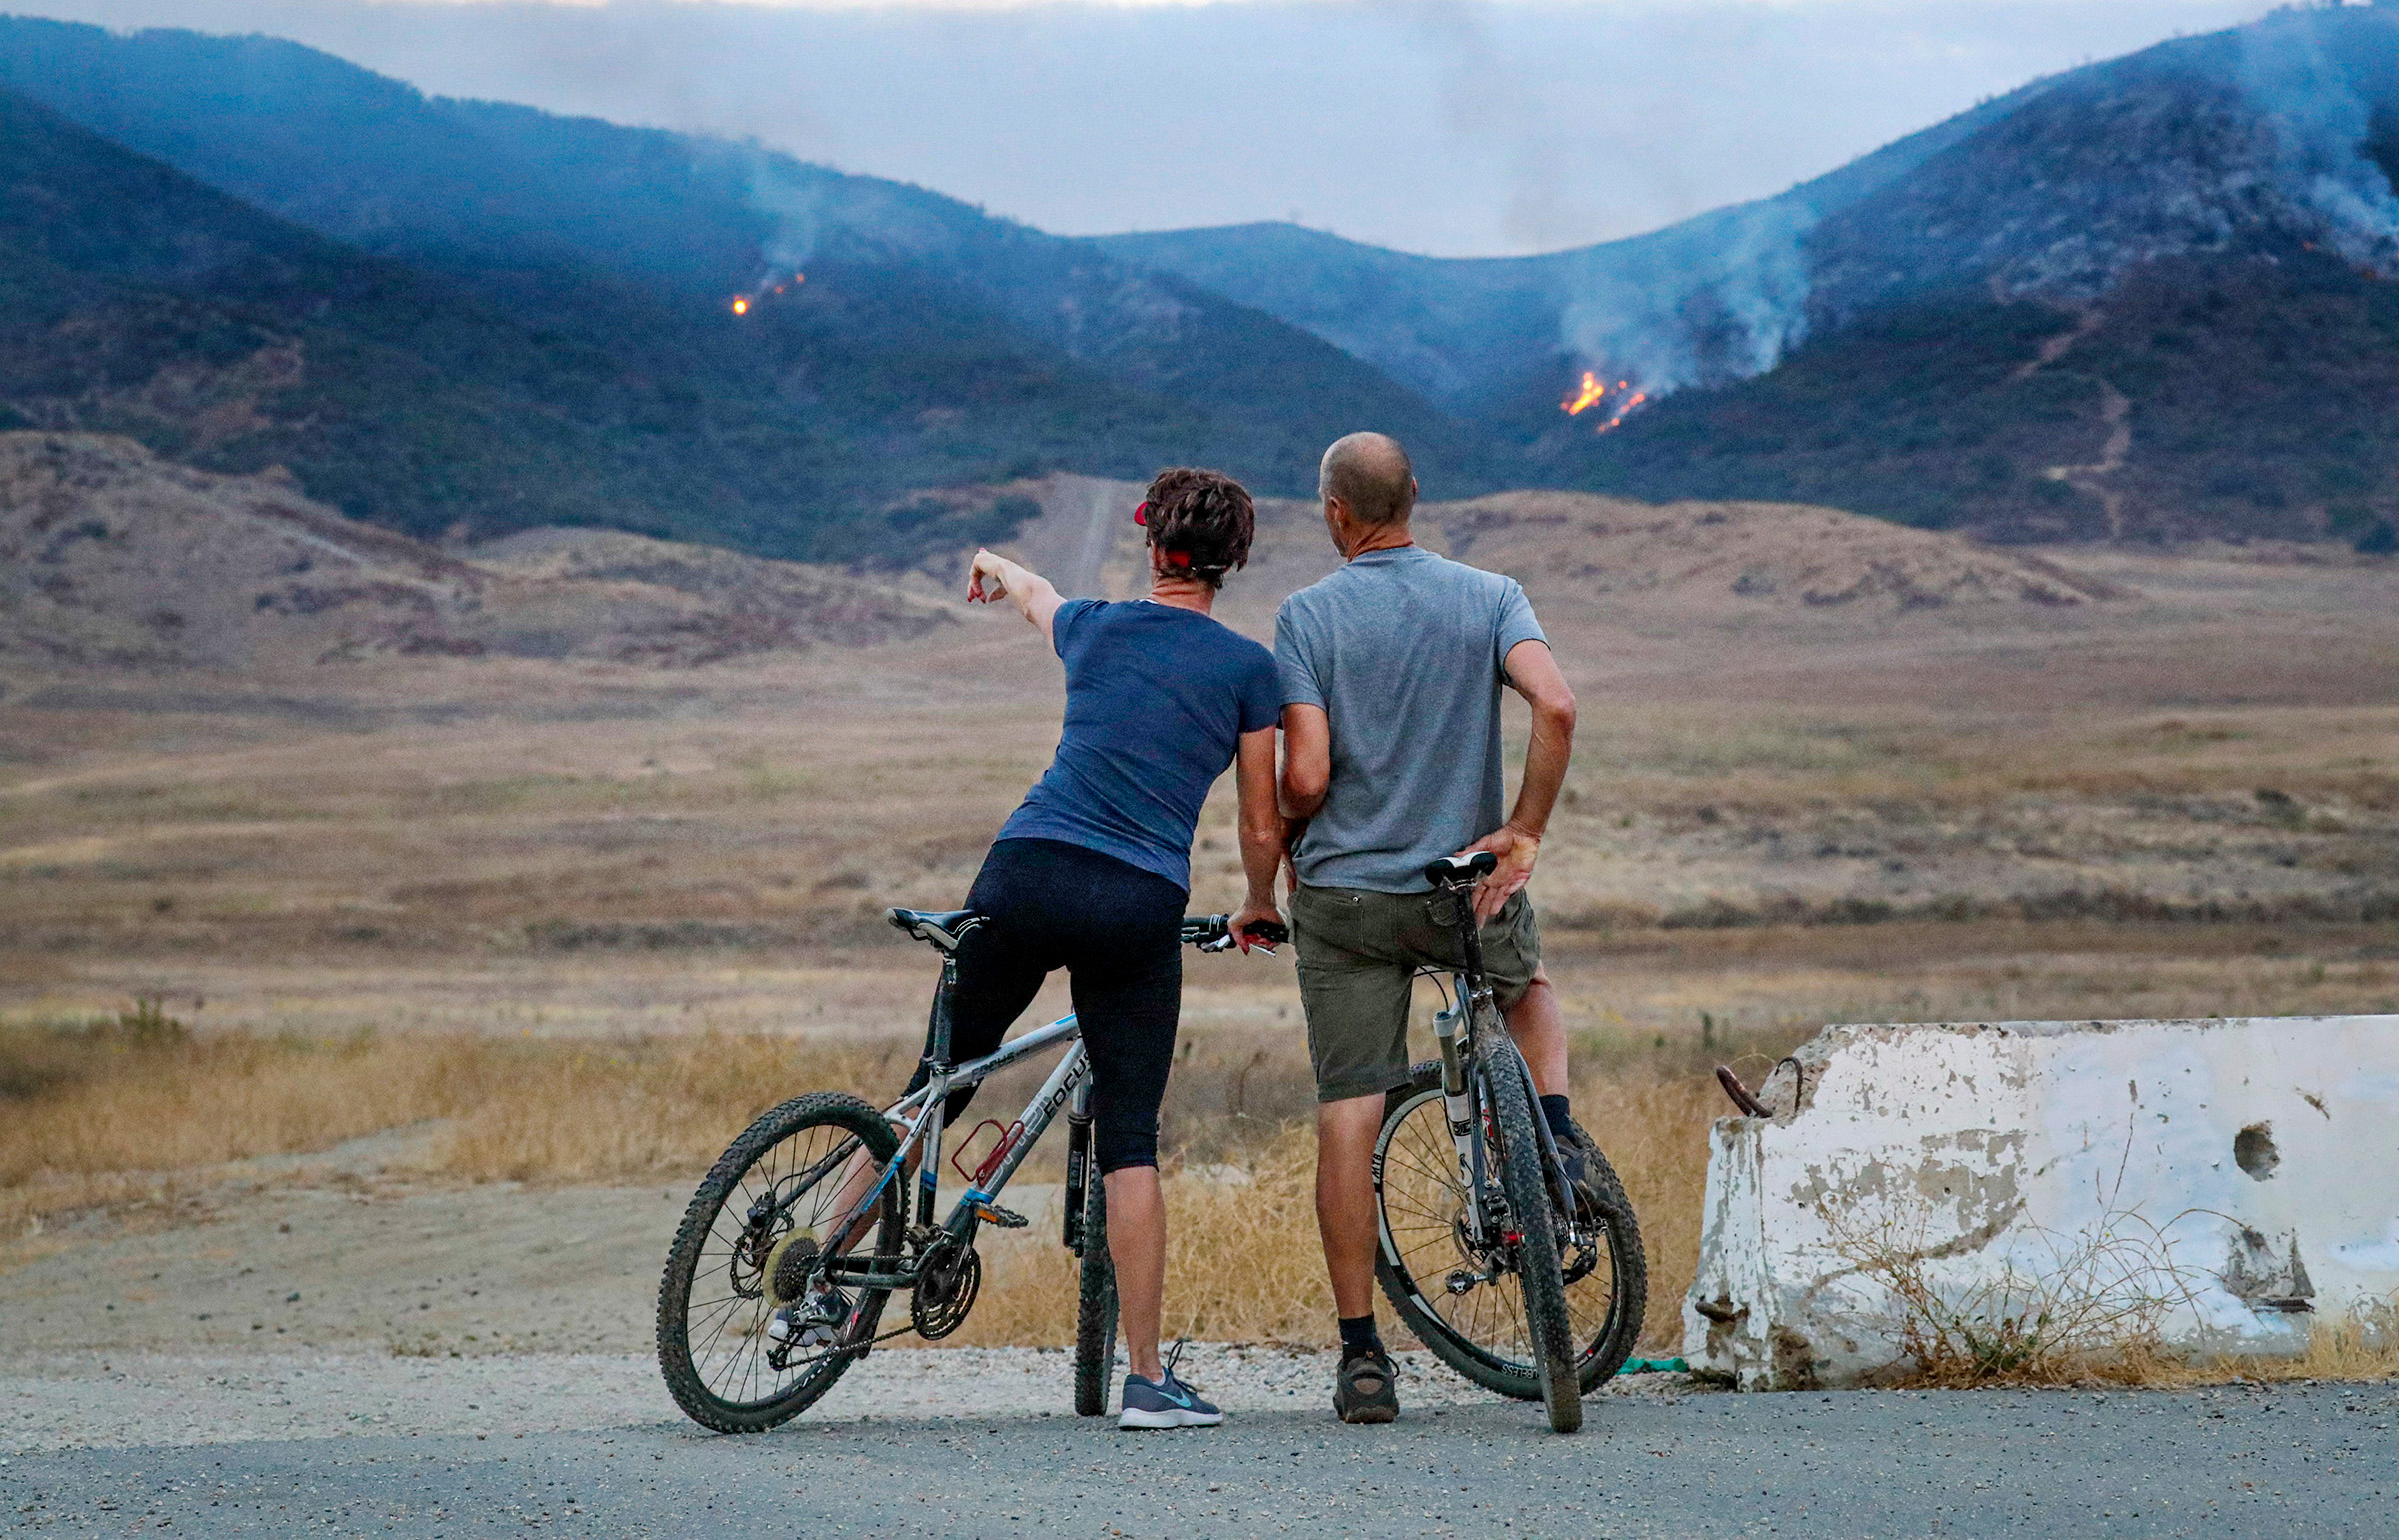 Tenaja fire near Murrieta grows to 1,400 acres; crews prepare for daytime heat and winds